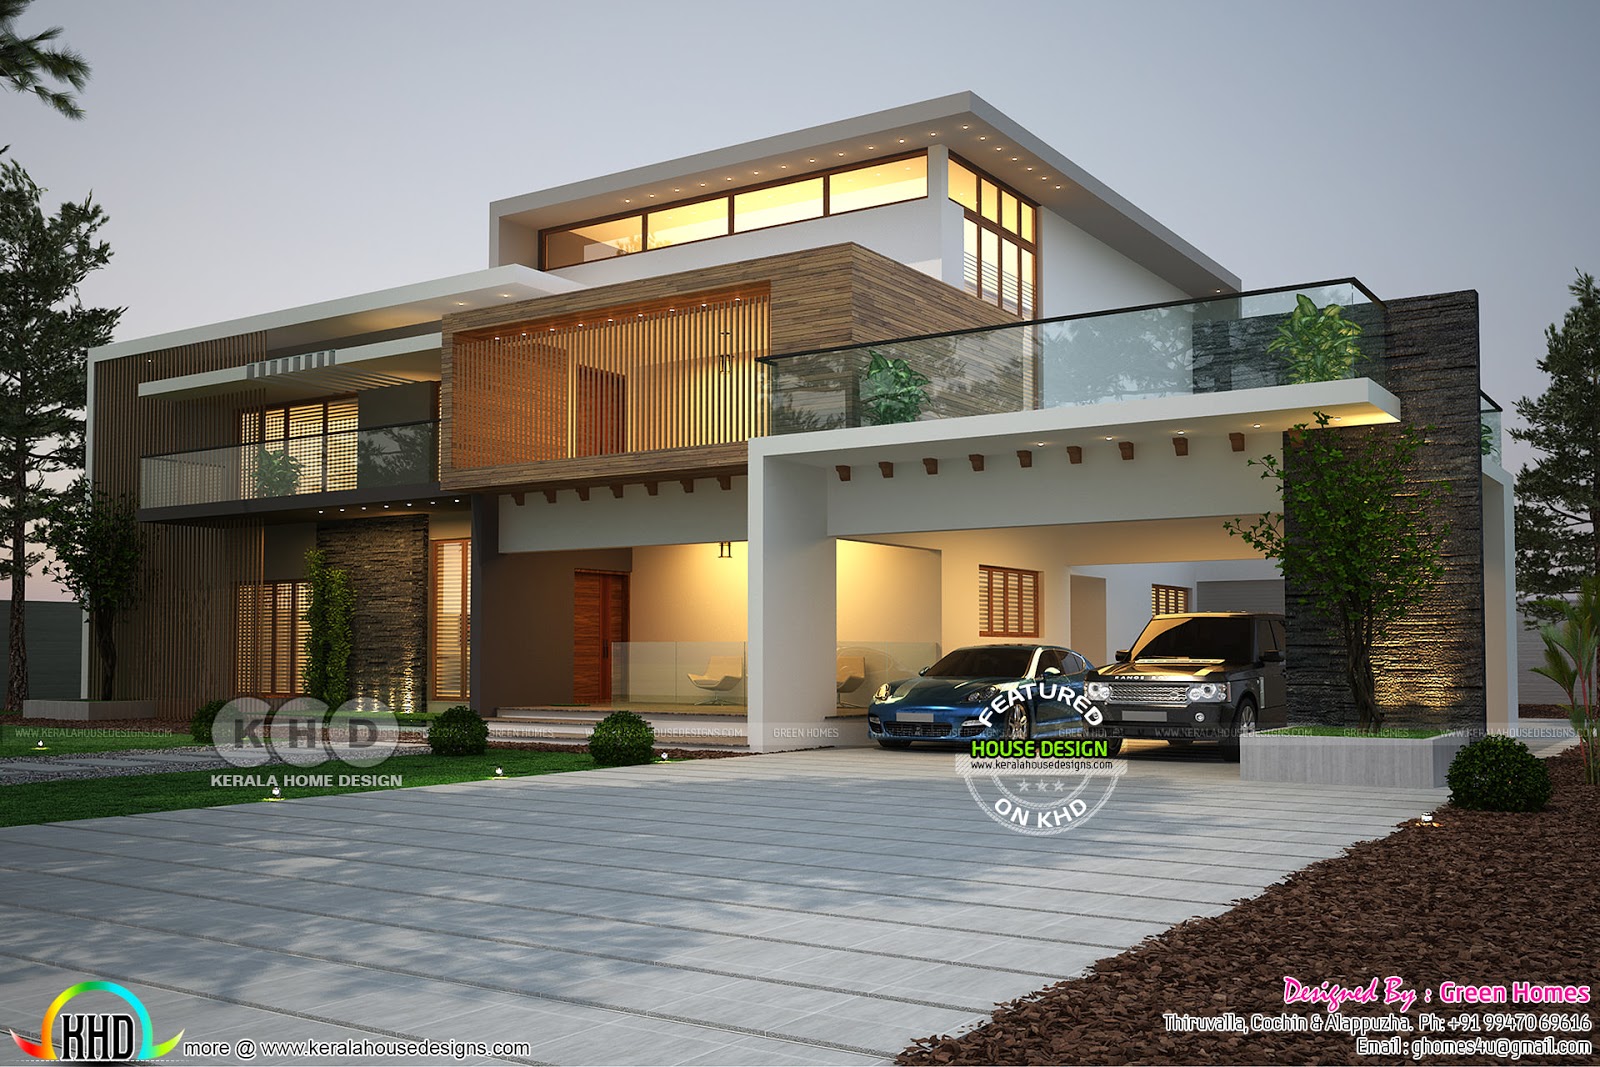 Luxury 7  bedroom  Contemporary house  plan  Kerala home  